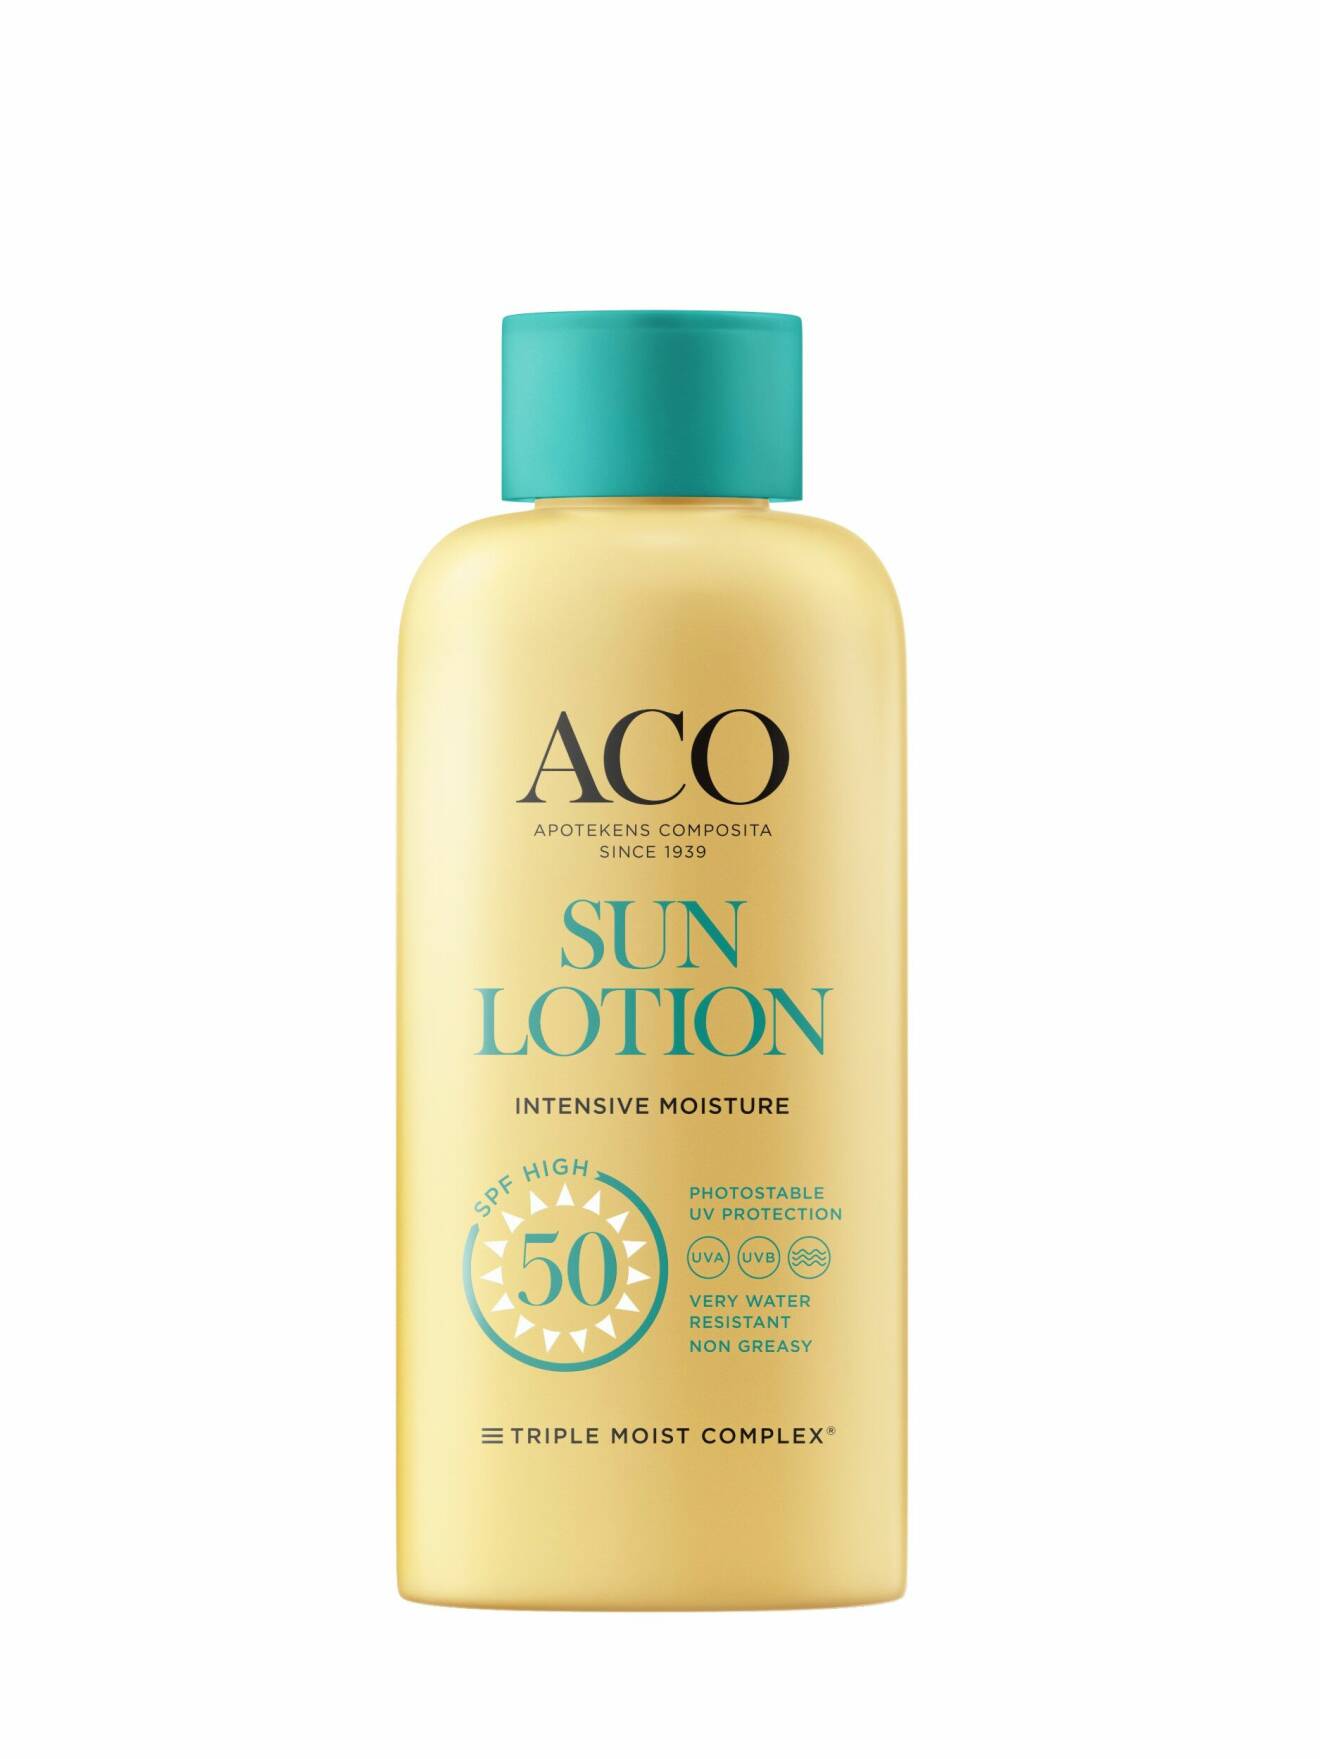 Aco sun lotion spf50, UVA UVB